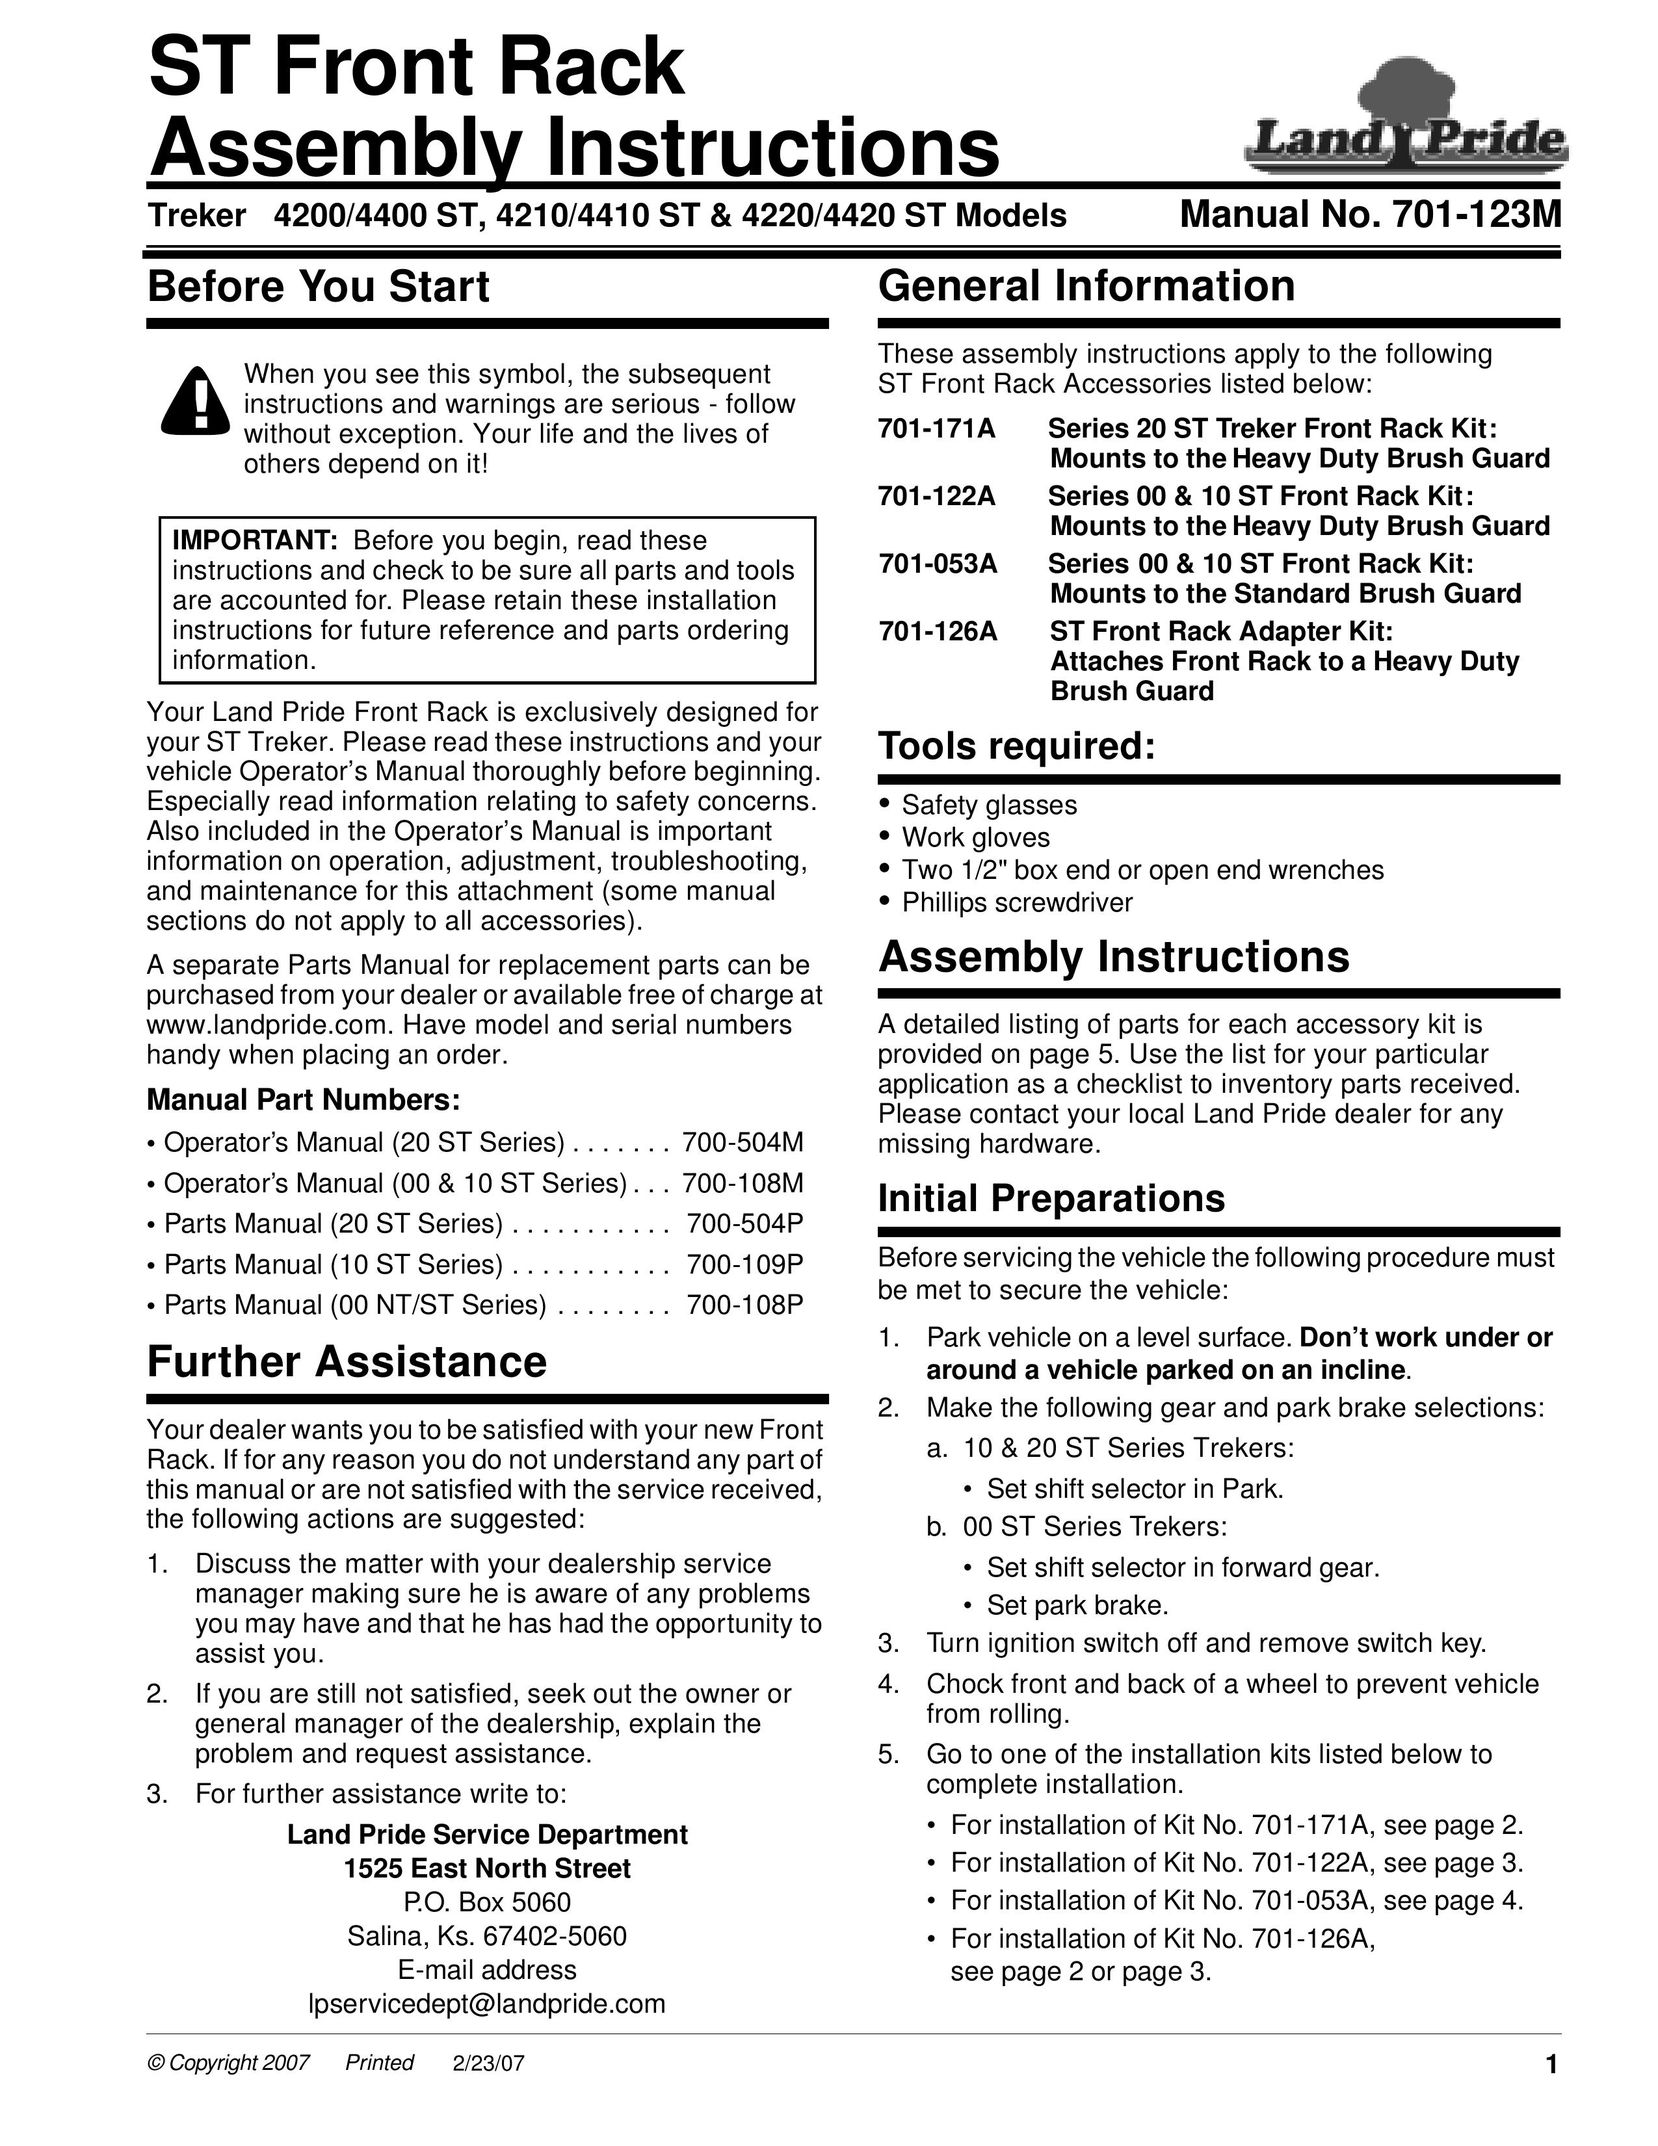 Land Pride 701-126a Child Tracker User Manual